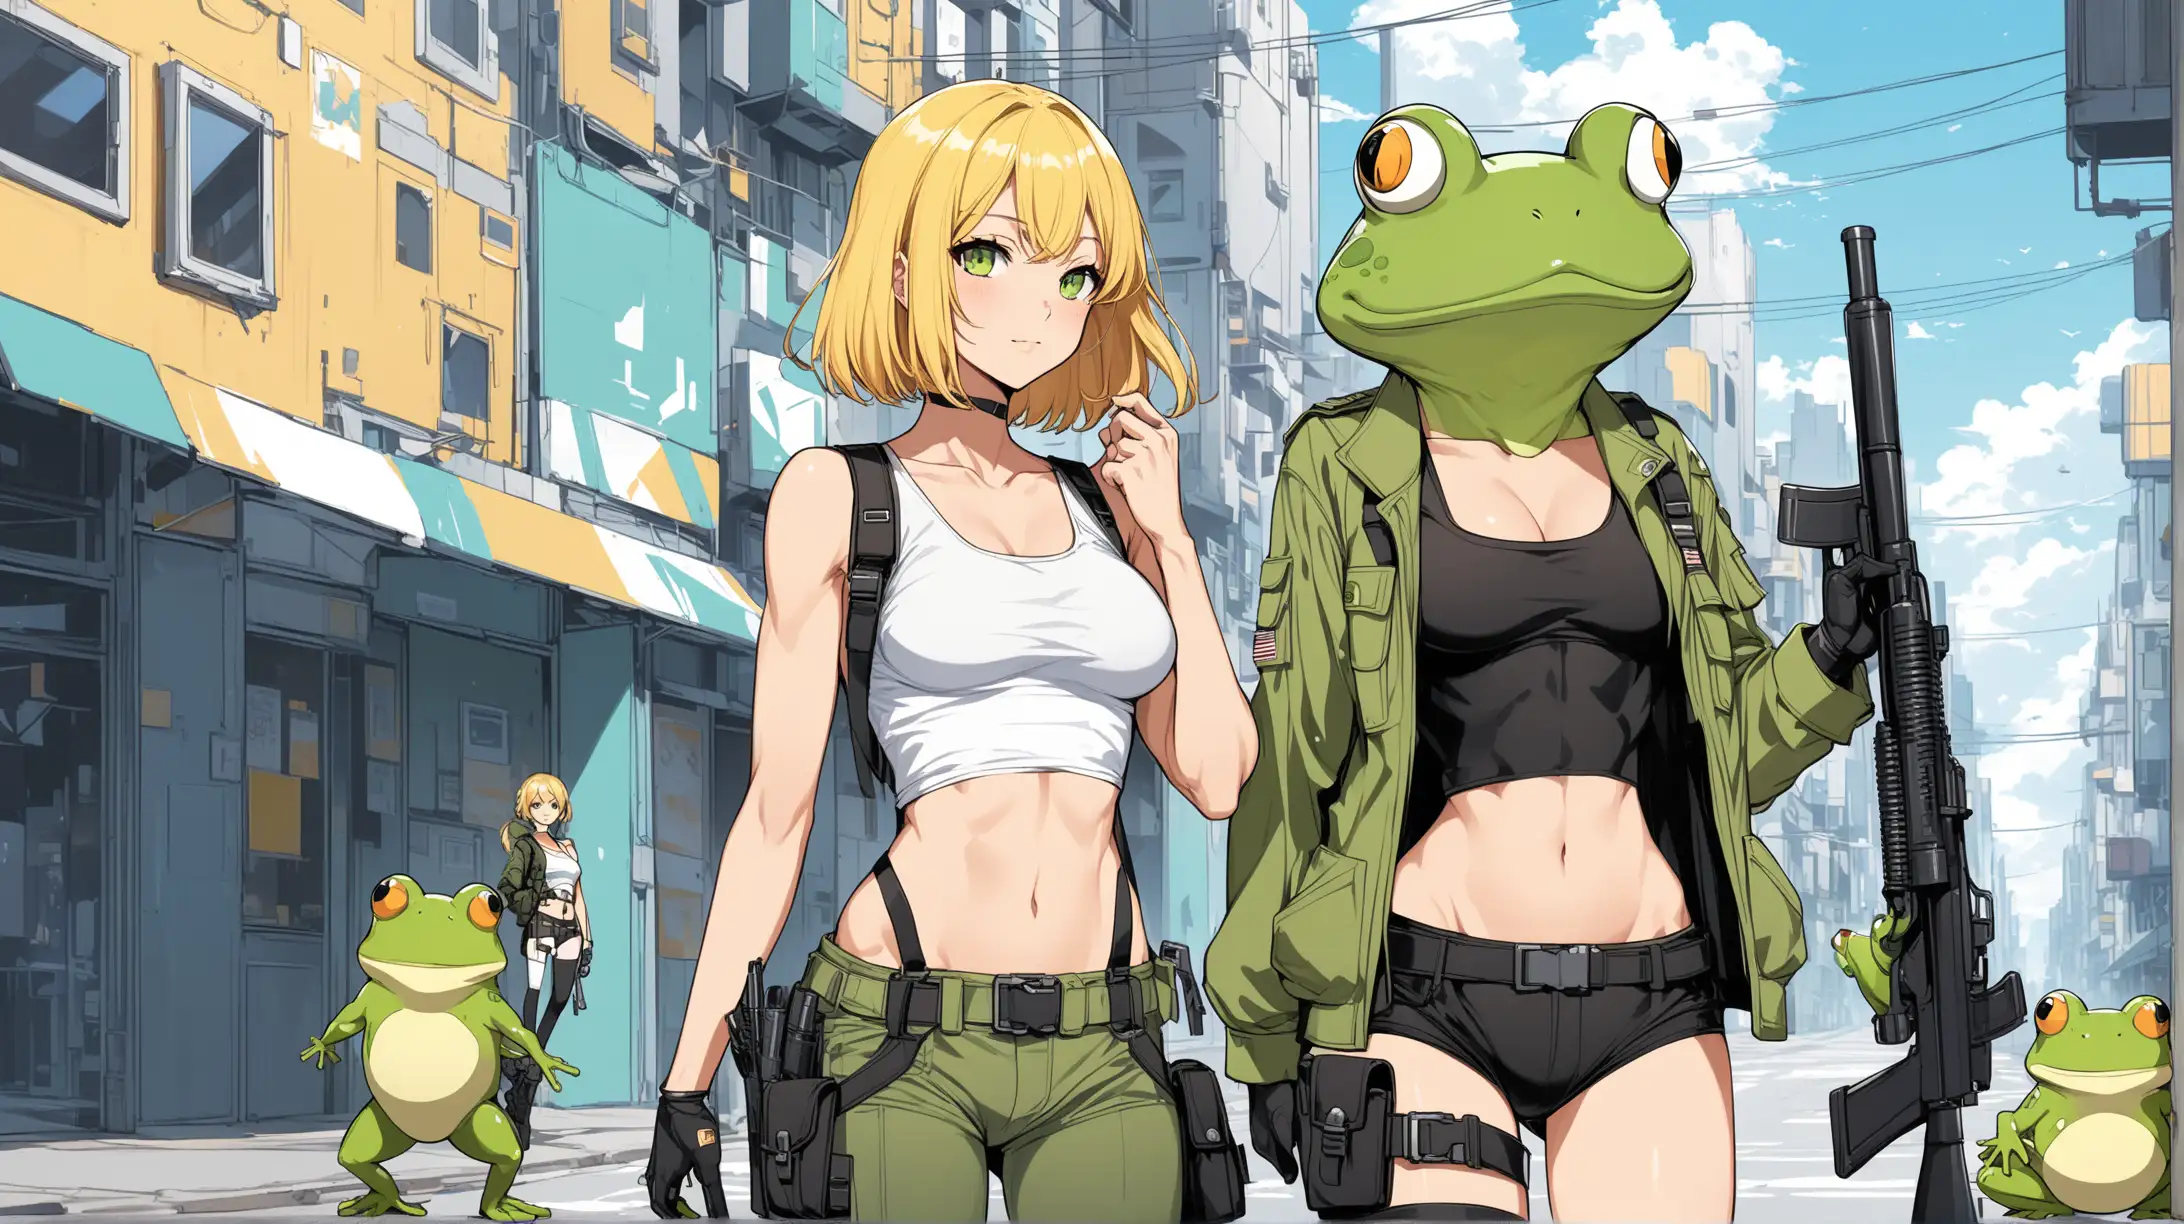 Futuristic Heroine and Frog Sidekick in Urban Combat Scene